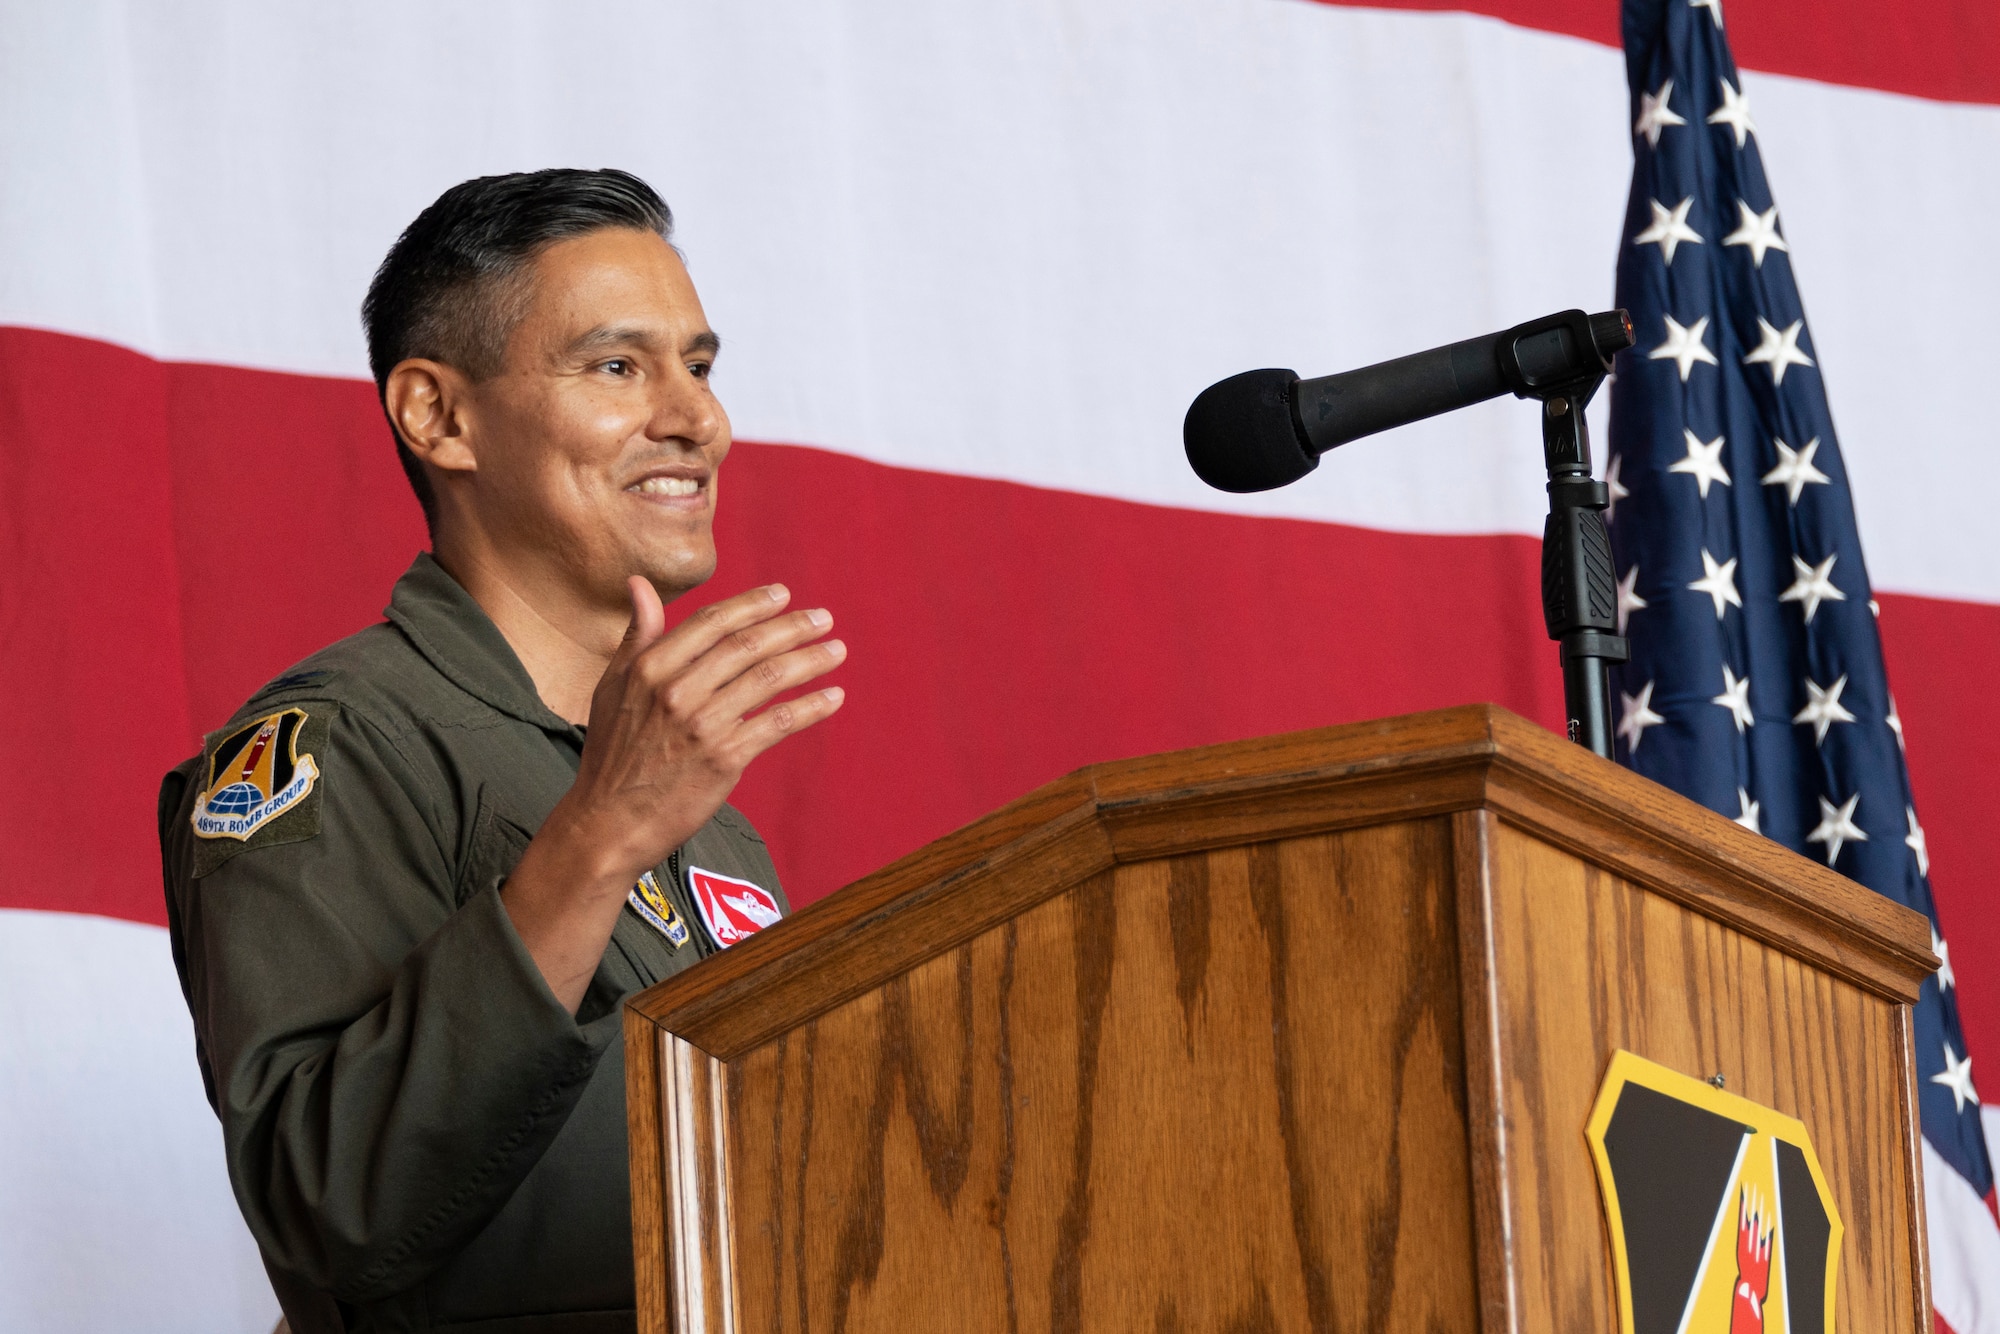 An airman speaks at a podium